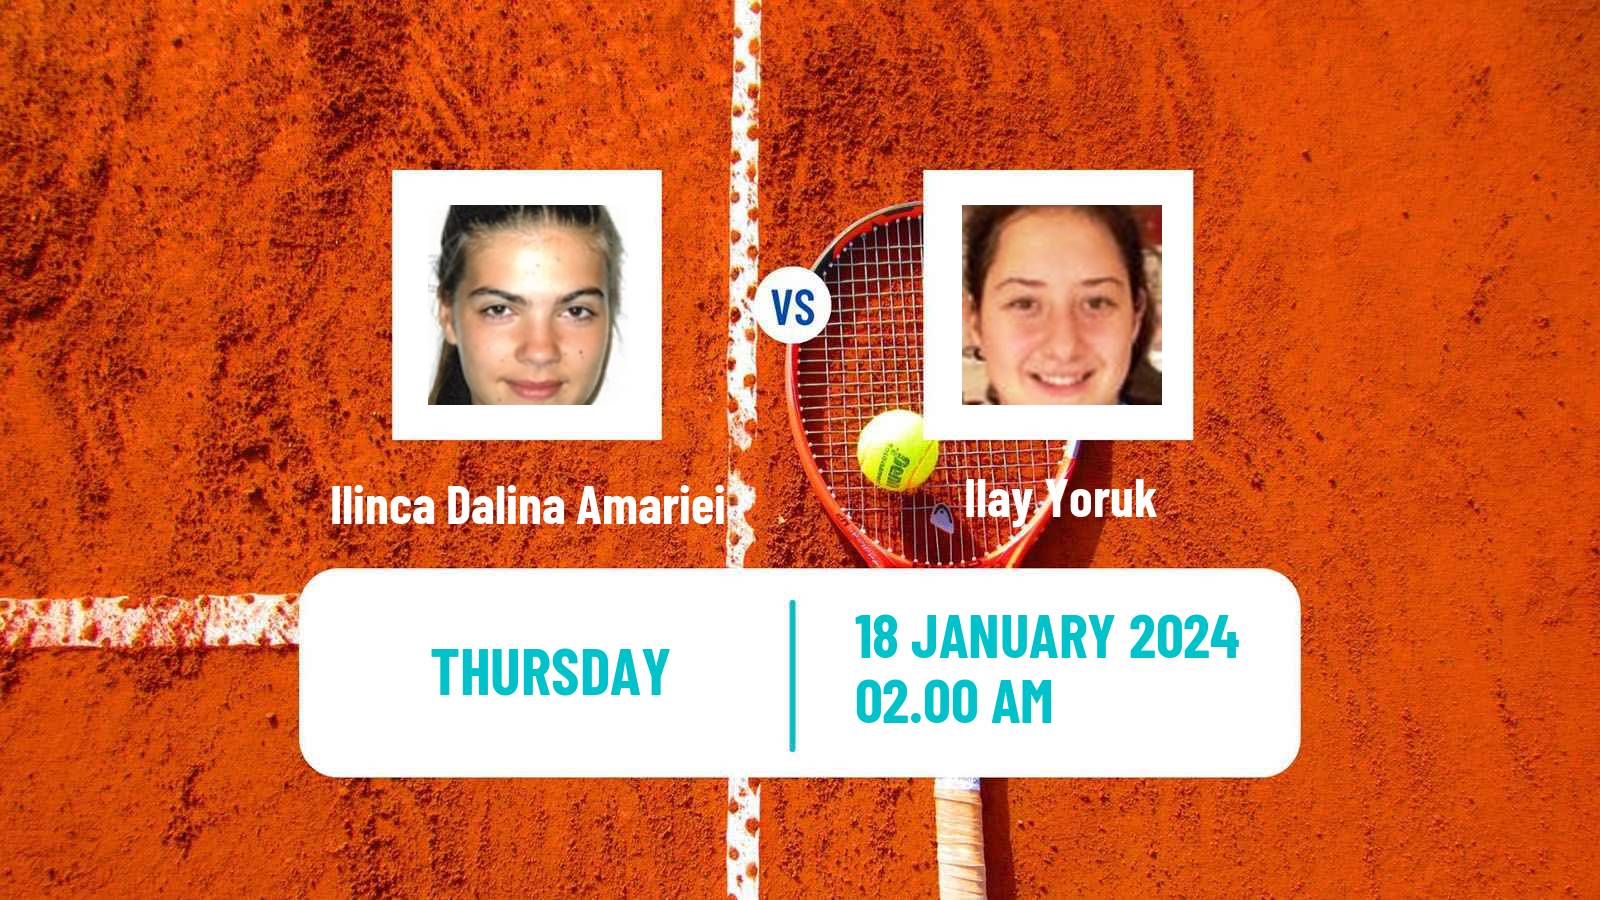 Tennis ITF W50 Antalya Women Ilinca Dalina Amariei - Ilay Yoruk